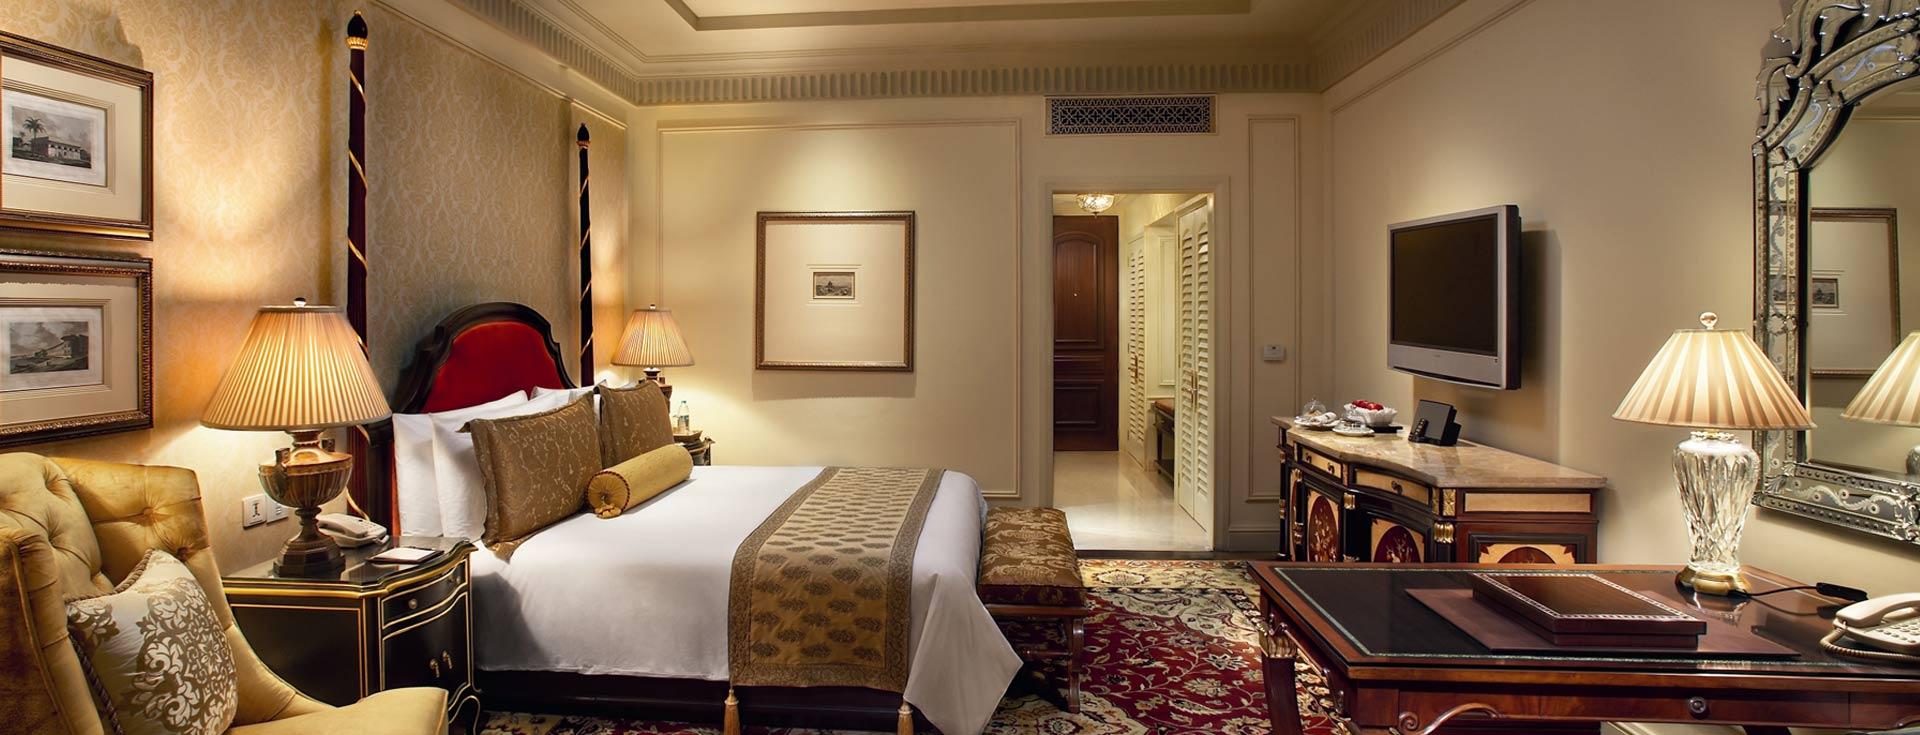 Royal Club Room - The Leela Palace New Delhi 